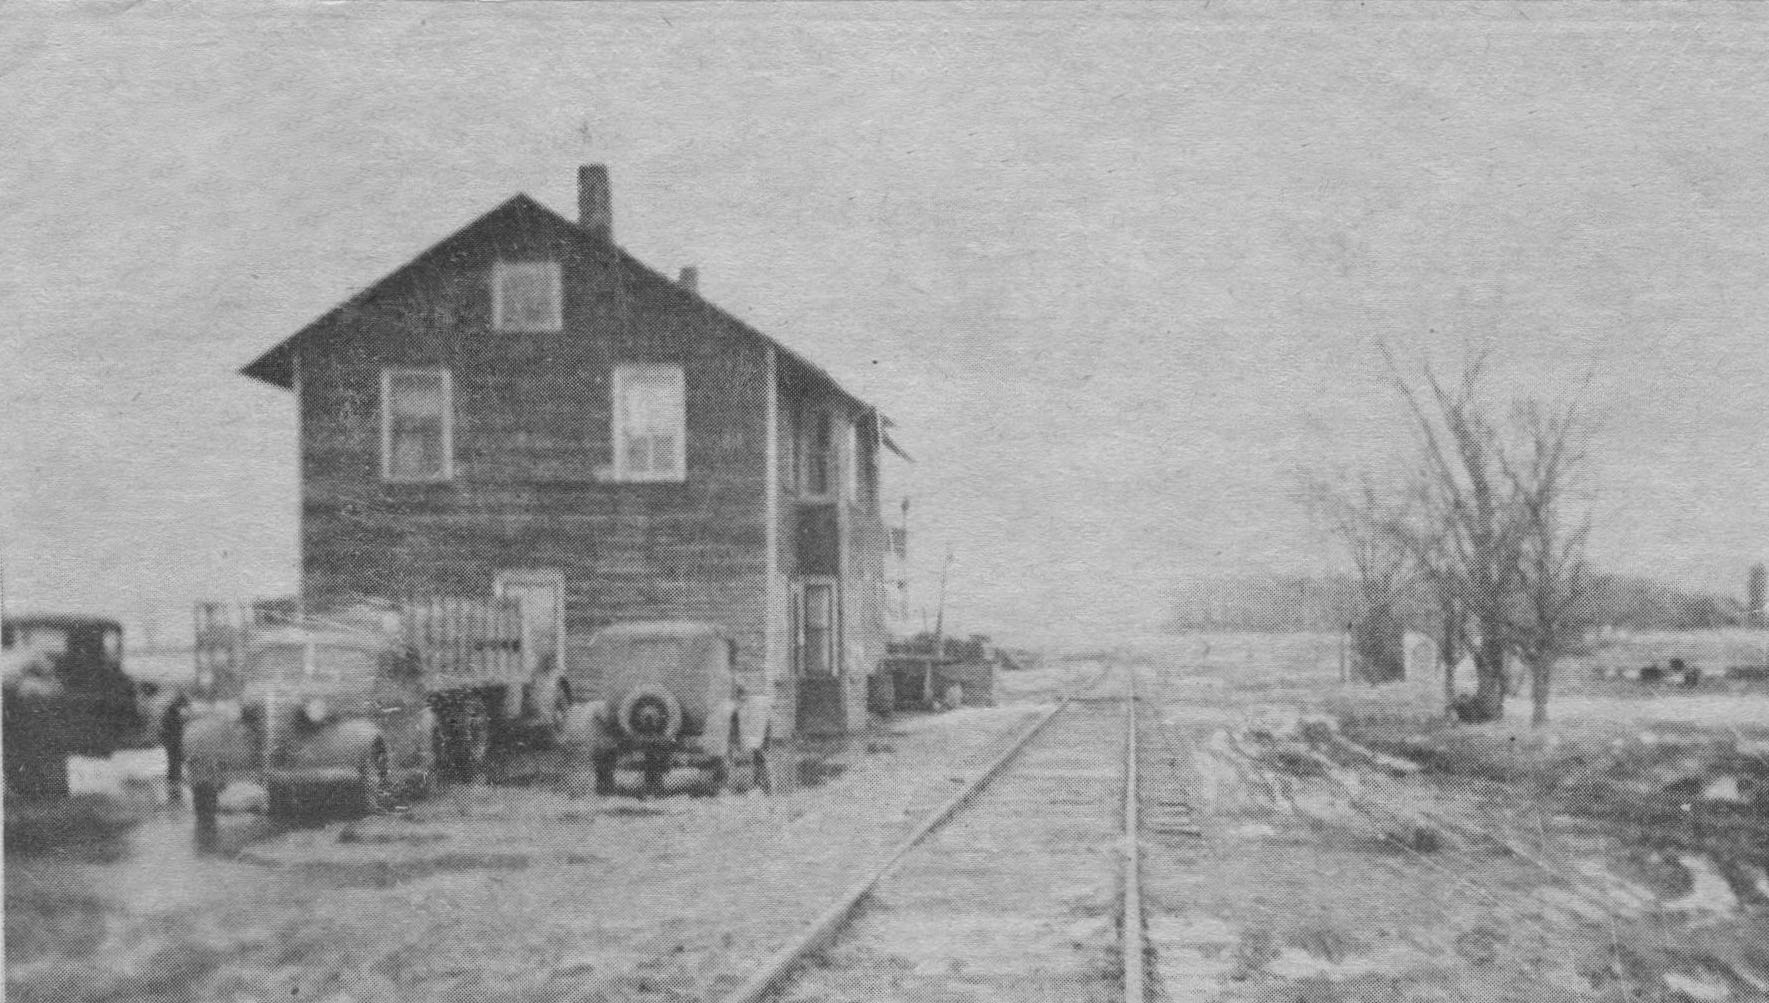 The depot